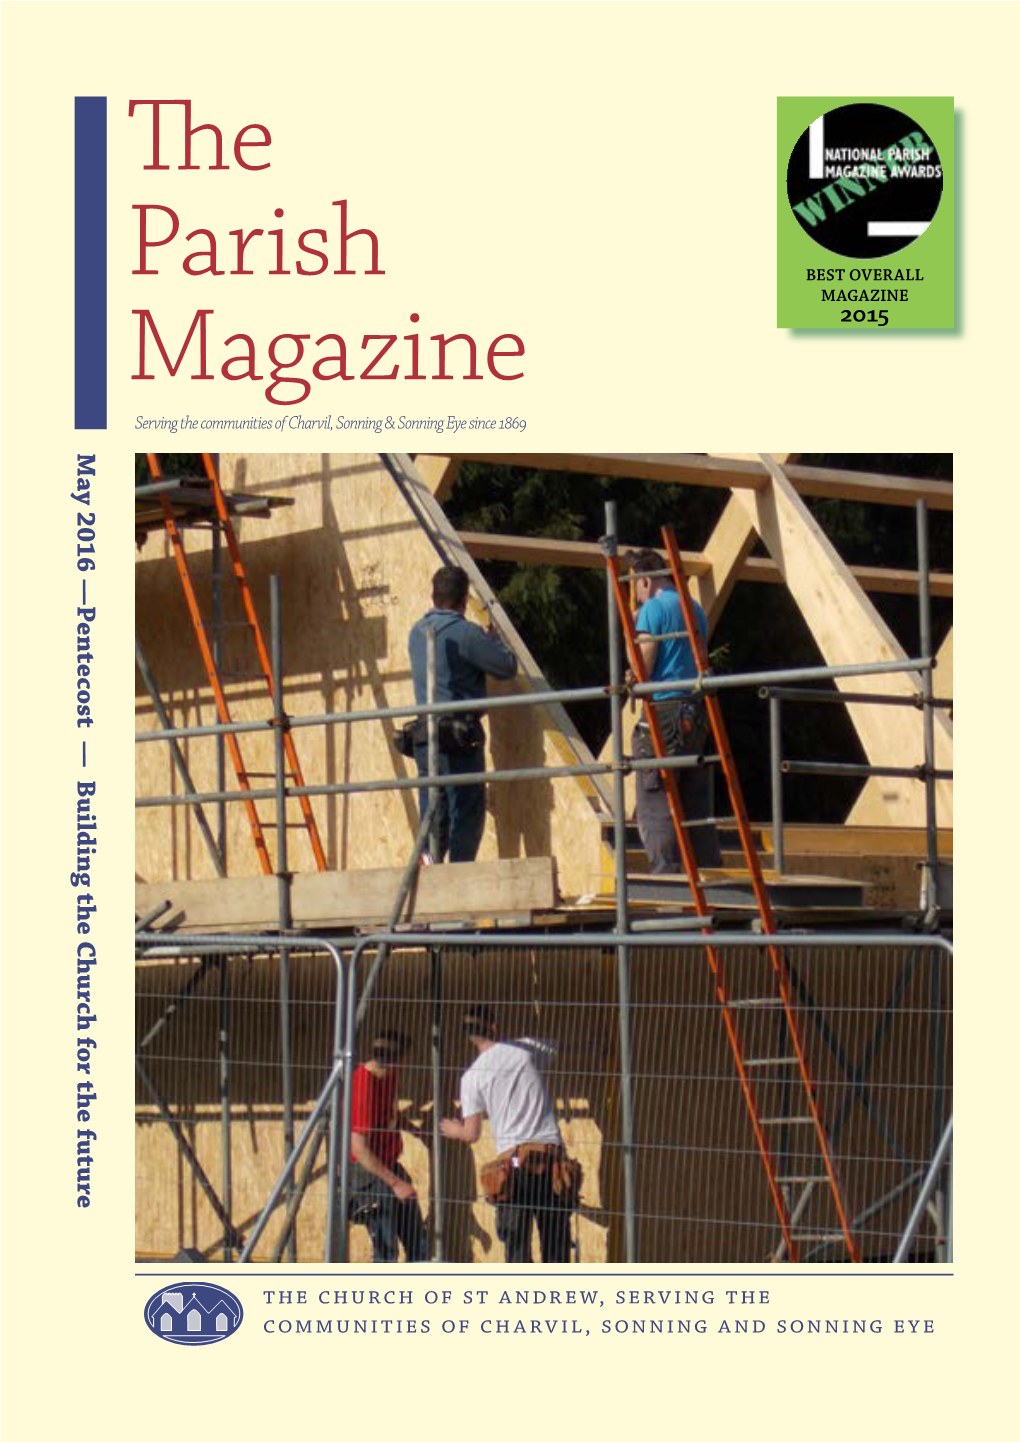 The Parish Magazine May 2016 Edition